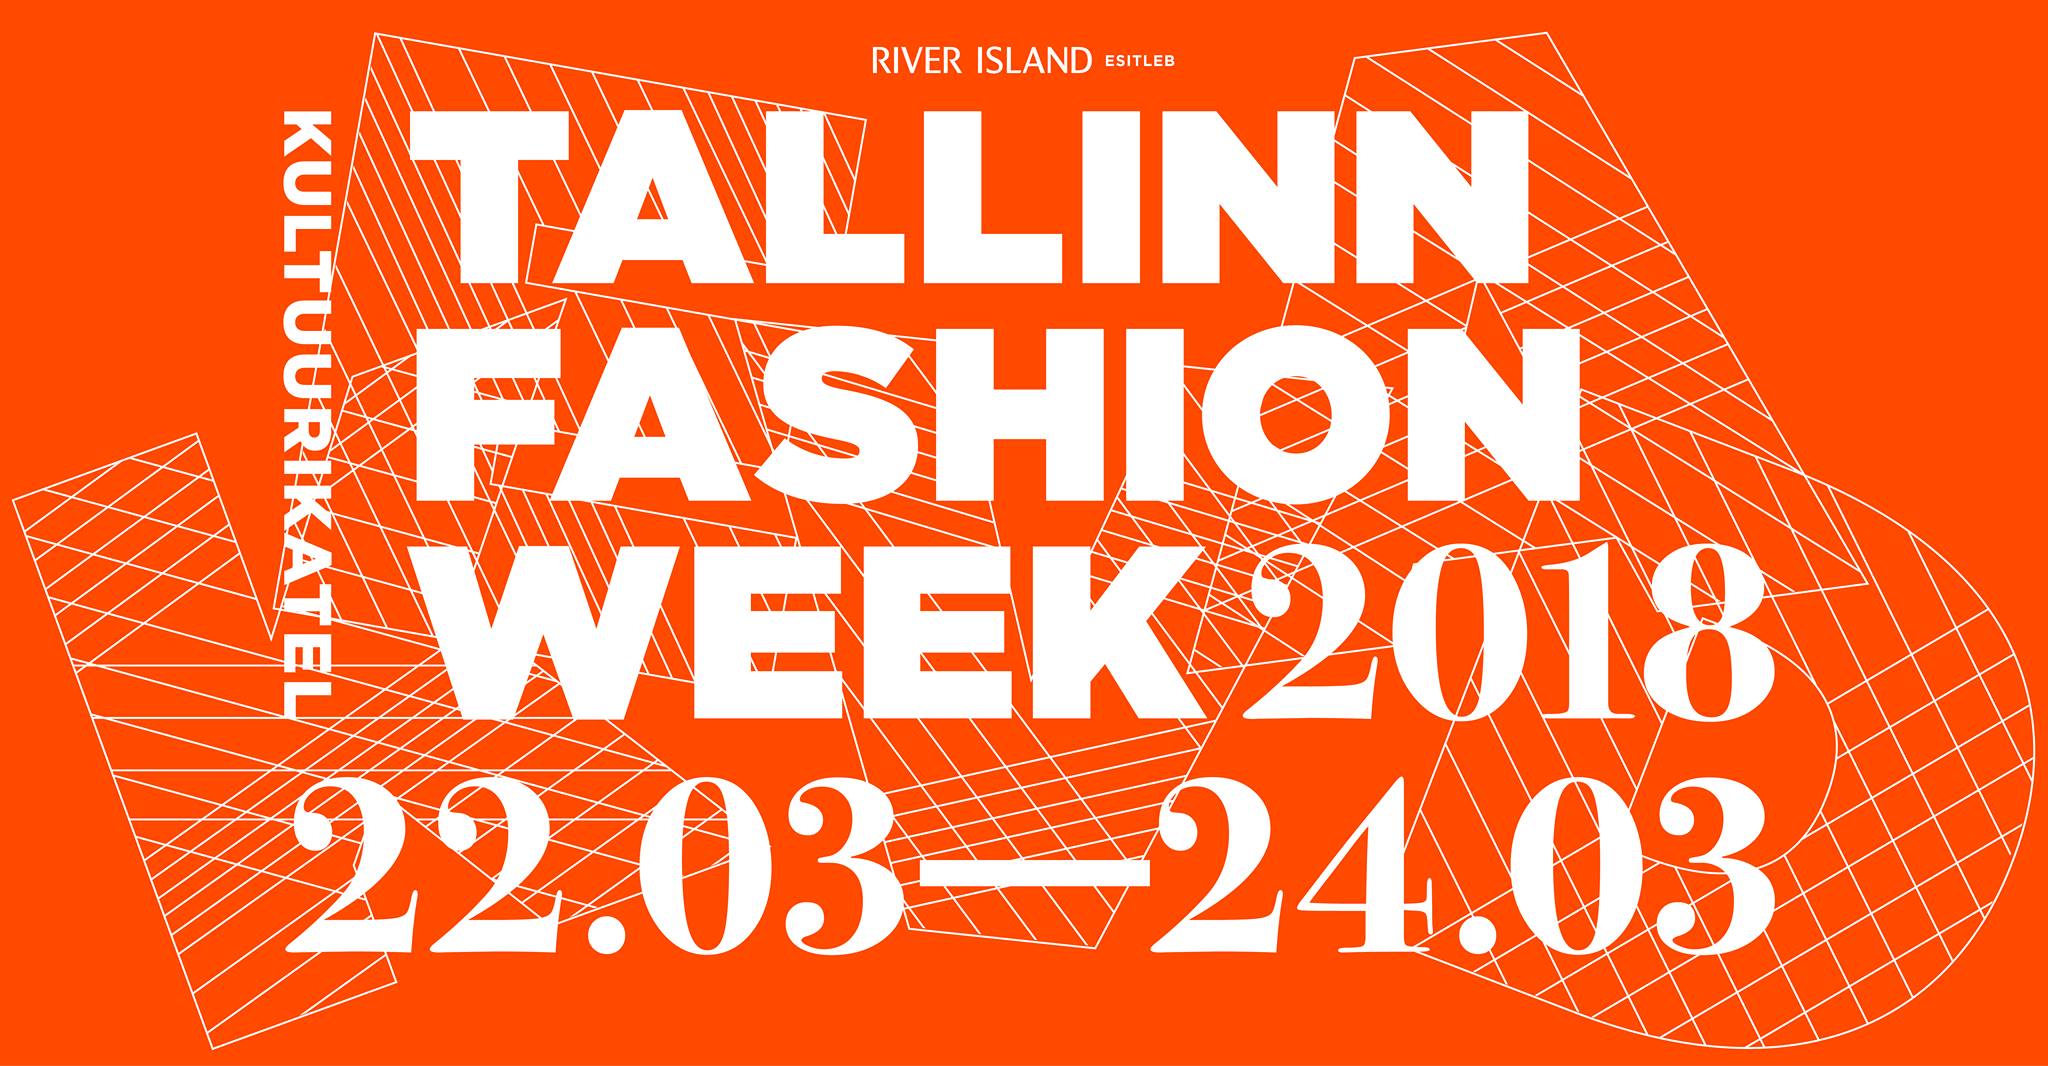 6744Tallinn Fashion Week 2018